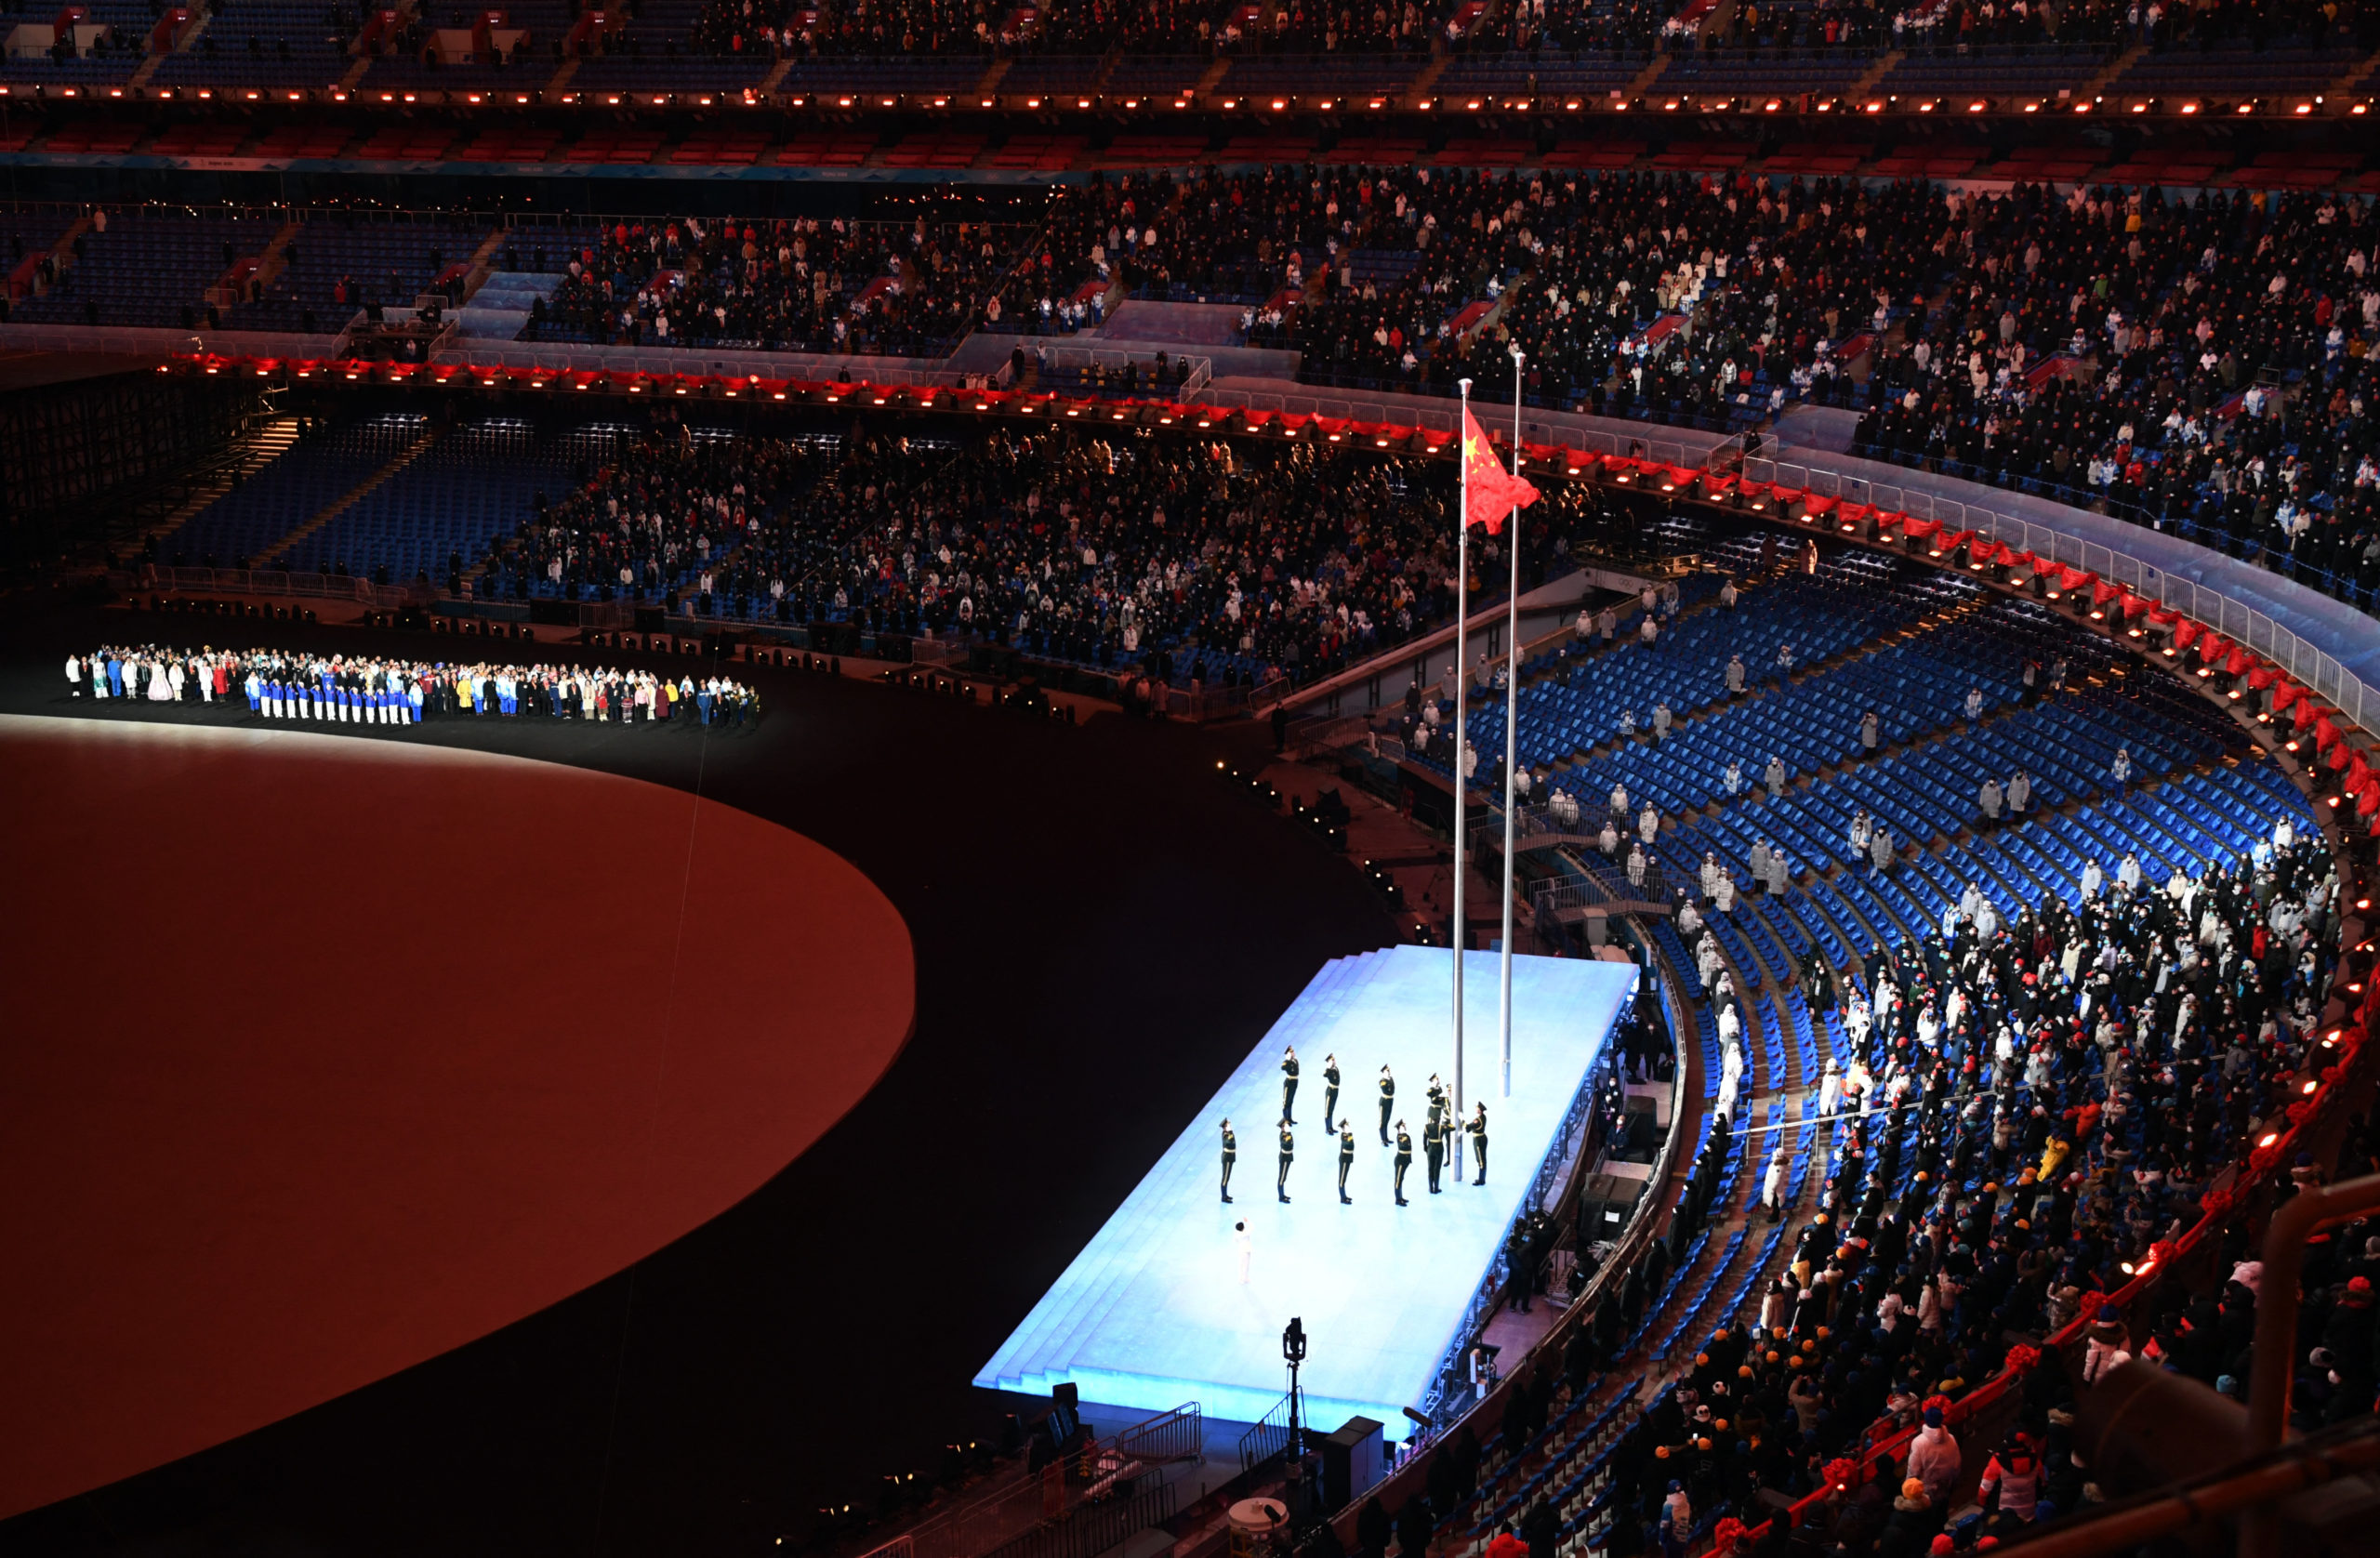 2022 Beijing Olympics - Opening Ceremony - National Stadium, Beijing, China - February 4, 2022. The China national flag is raised during the opening ceremony. 